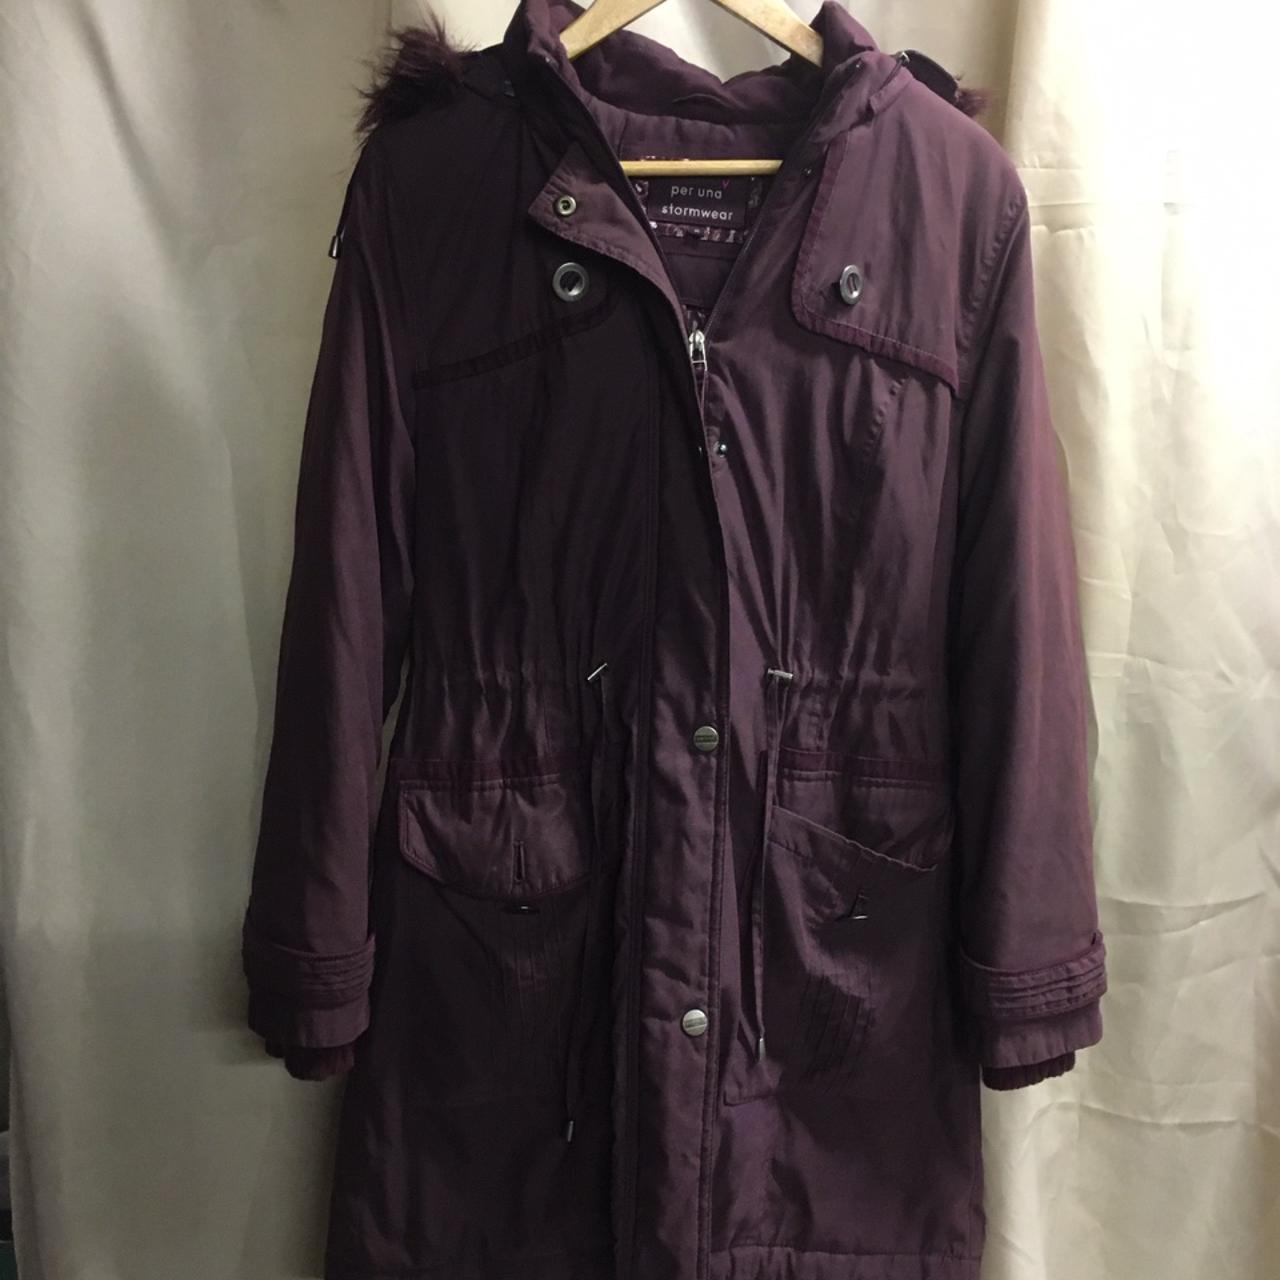 M&S per una stormwear plum trench coat with hood, in... - Depop